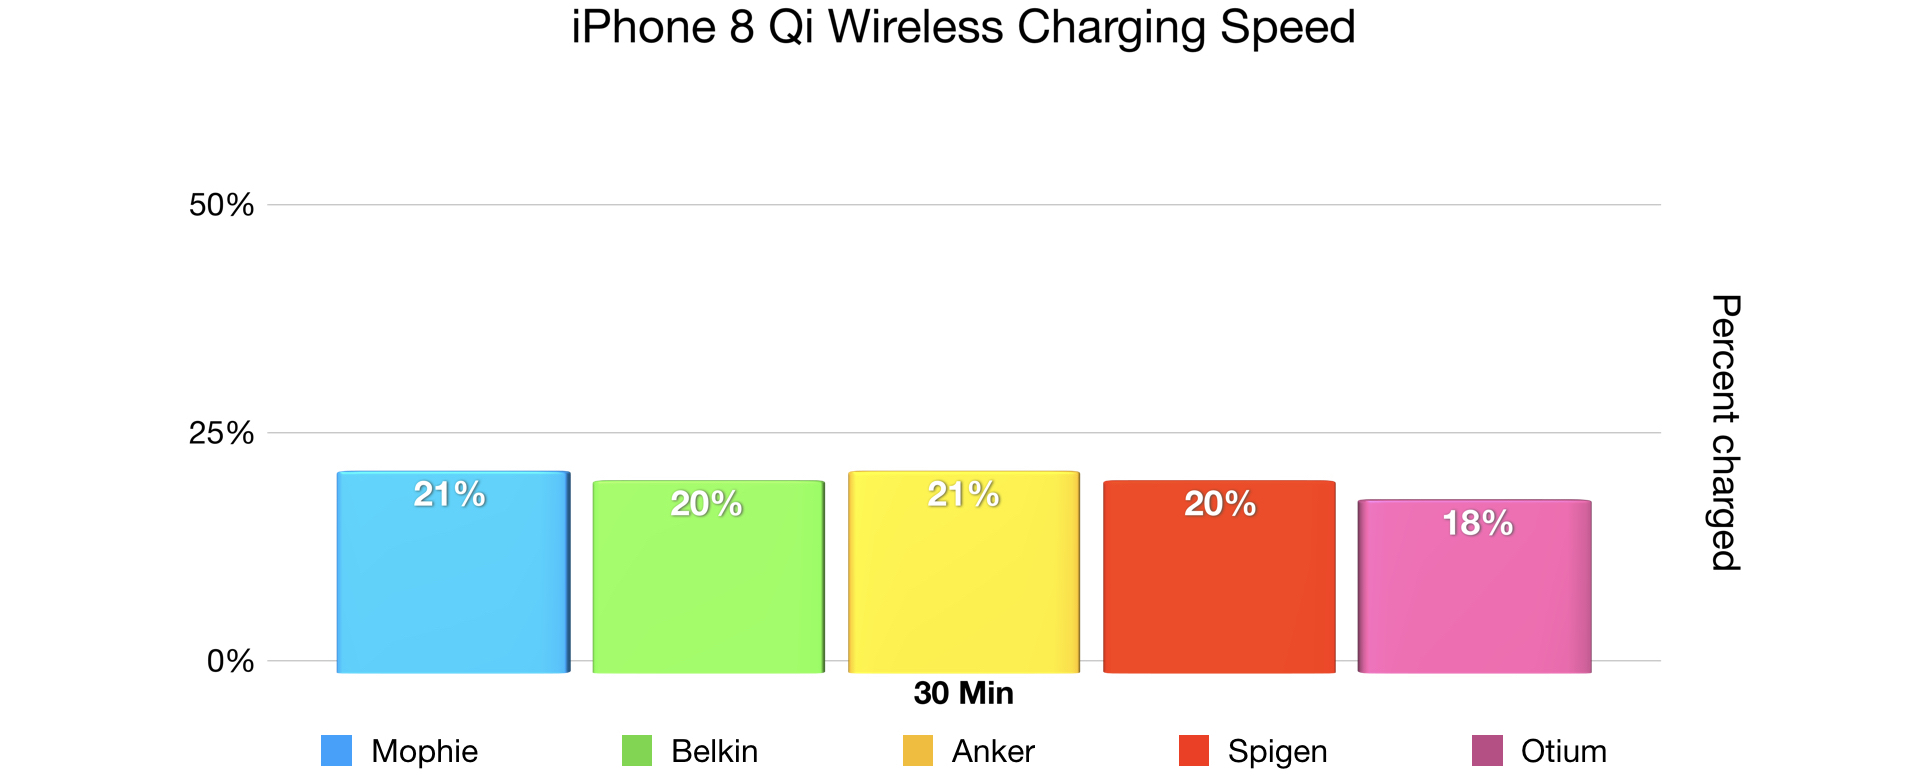 iphone-8-qi-charger-speed-belkin-vs-mophie-vs-anker-vs-spigen-vs-otium-2.jpeg?quality=82&strip=all